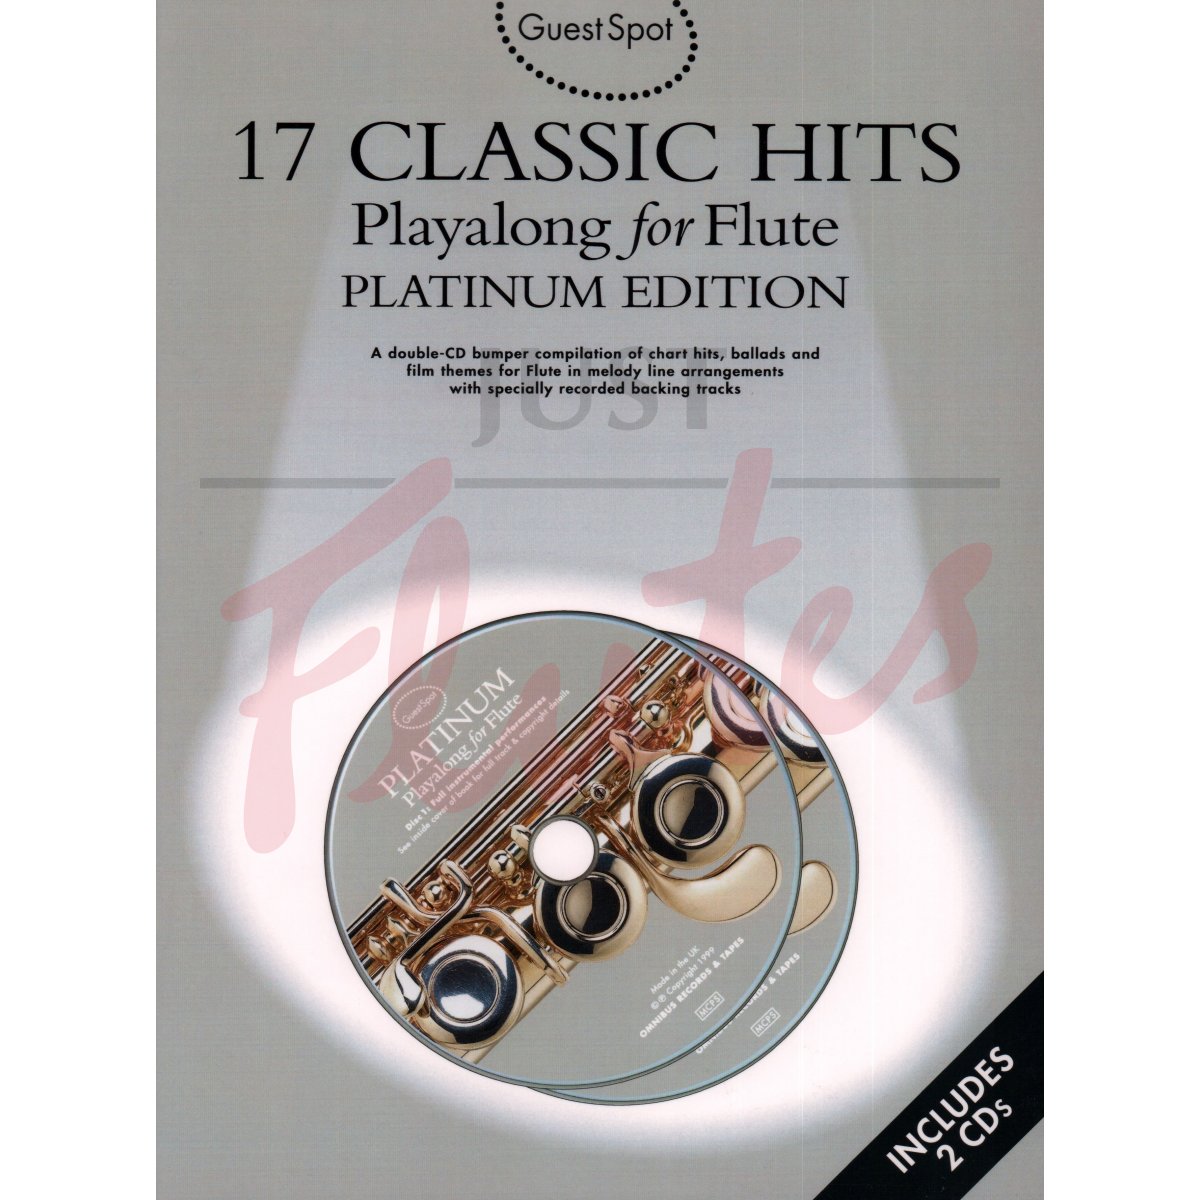 Guest Spot - 17 Classic Hits Platinum Edition [Flute]